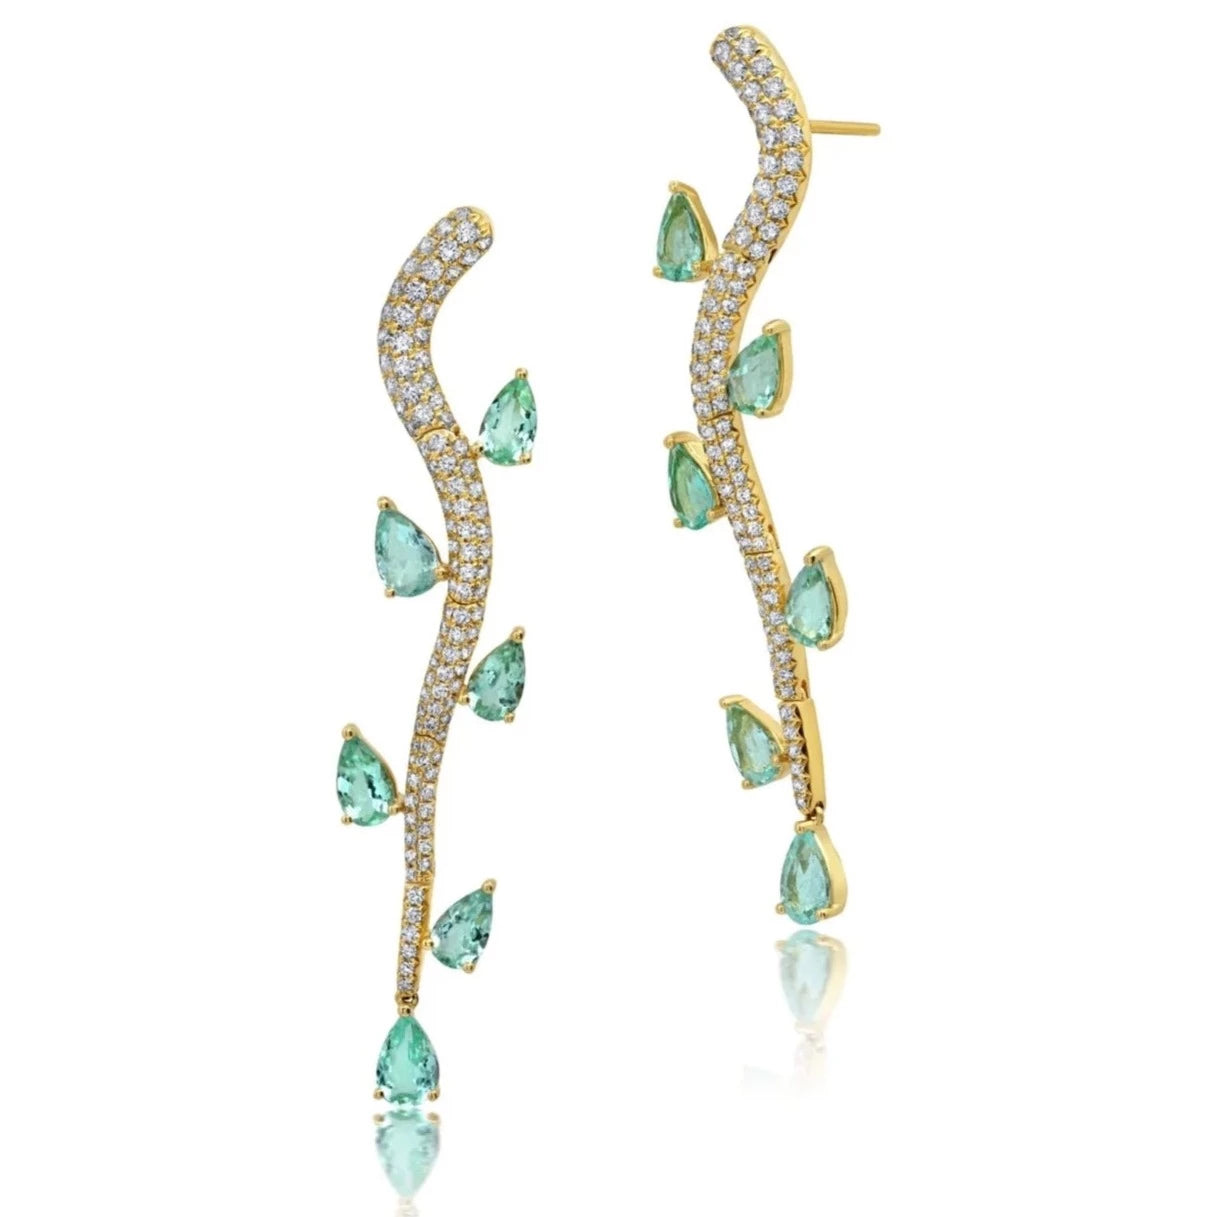 Paraiba Tourmaline earrings, Graziela Gems